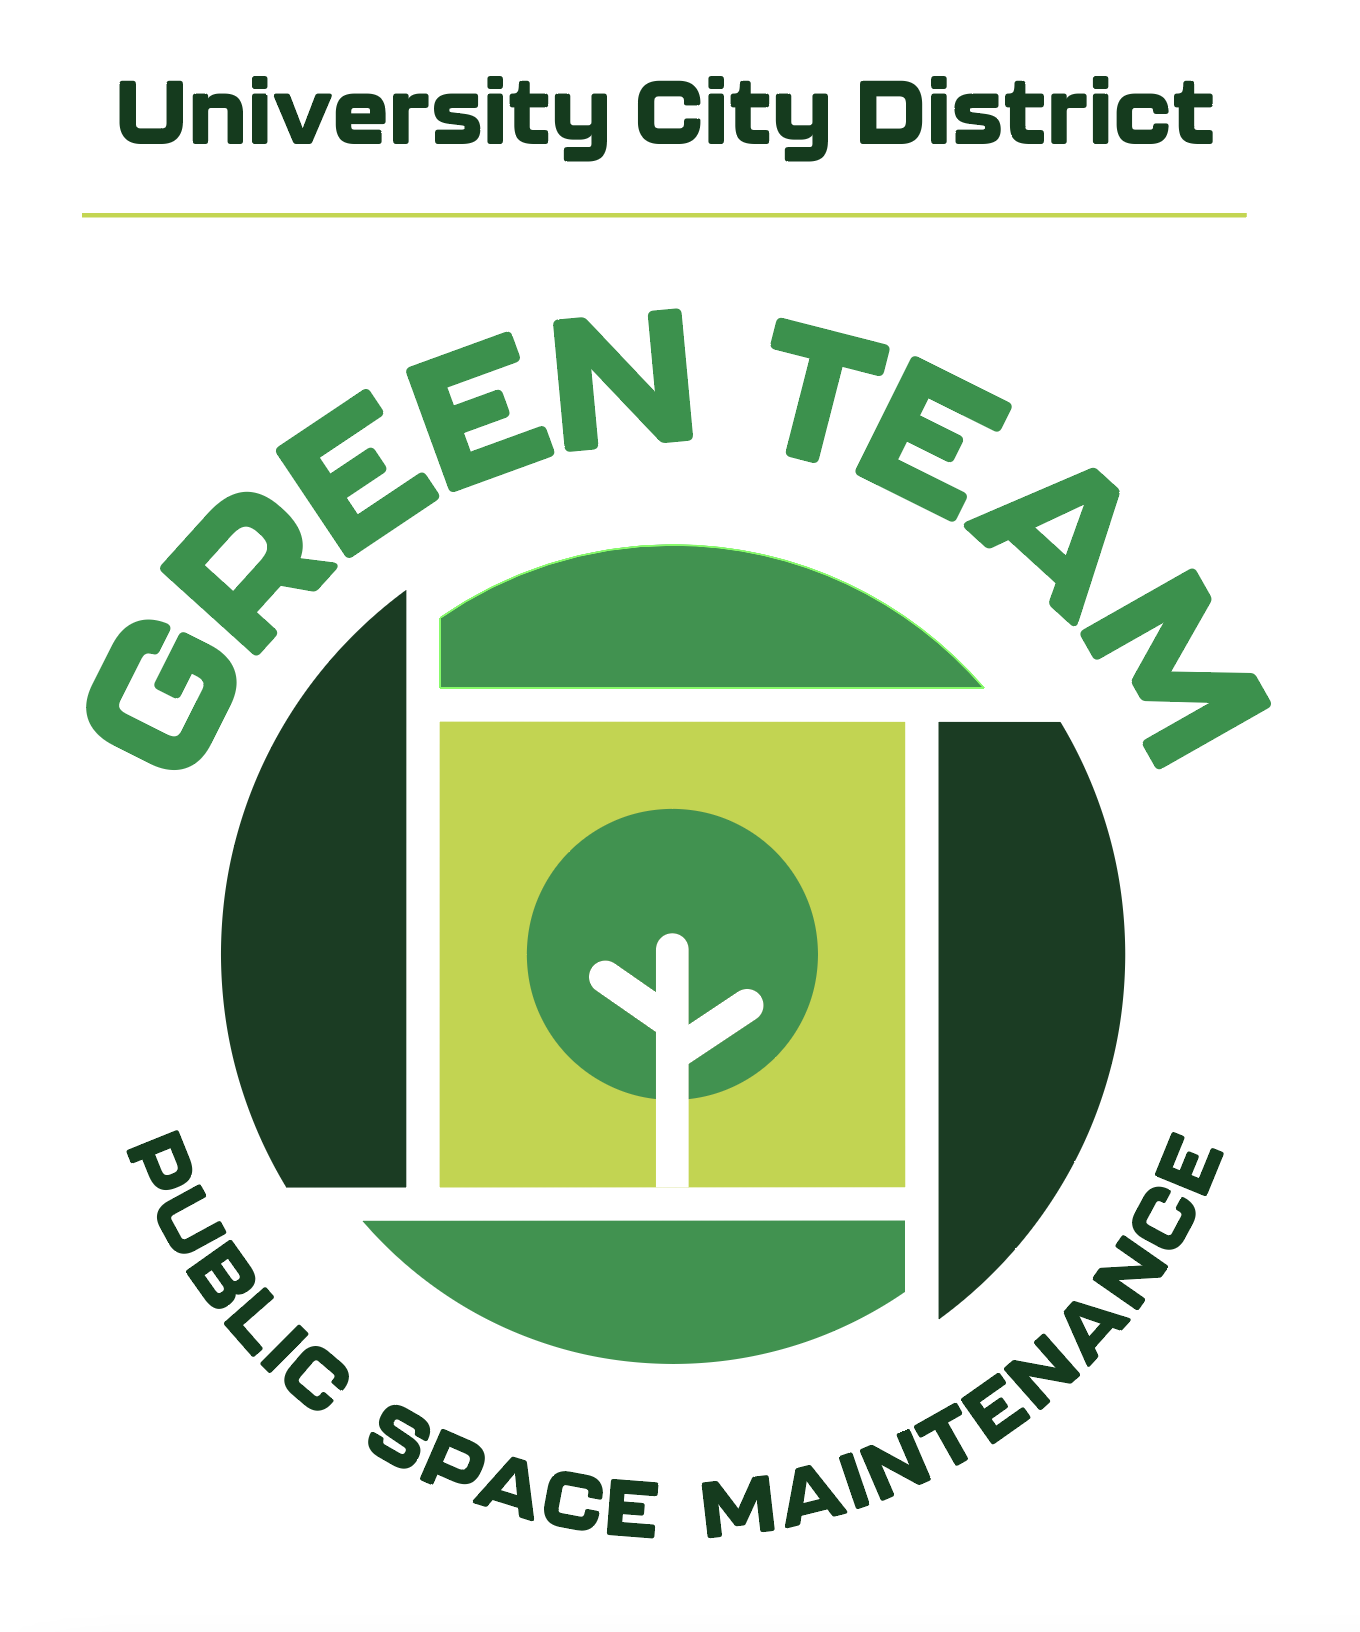 The Green Team logo